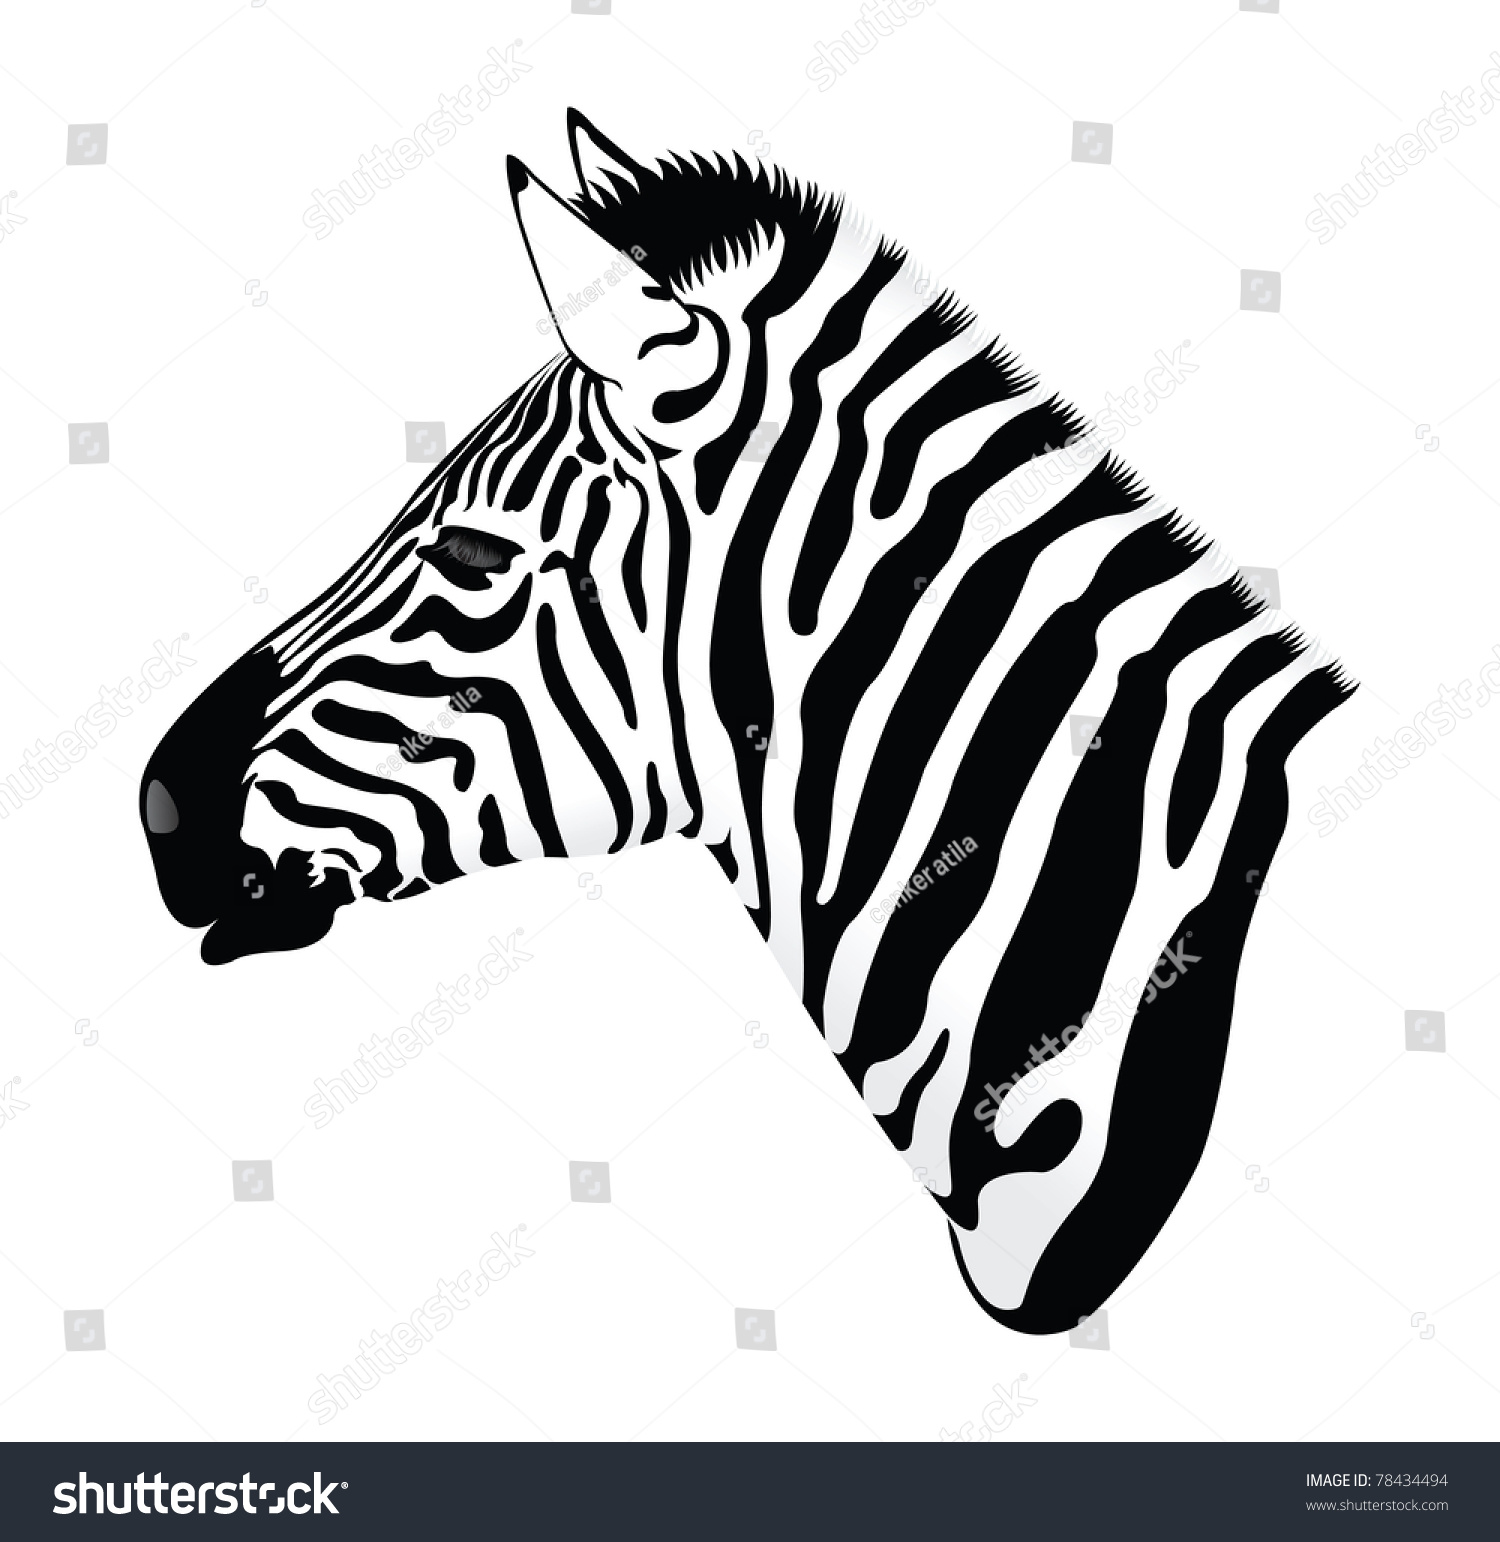 clipart zebra face - photo #39